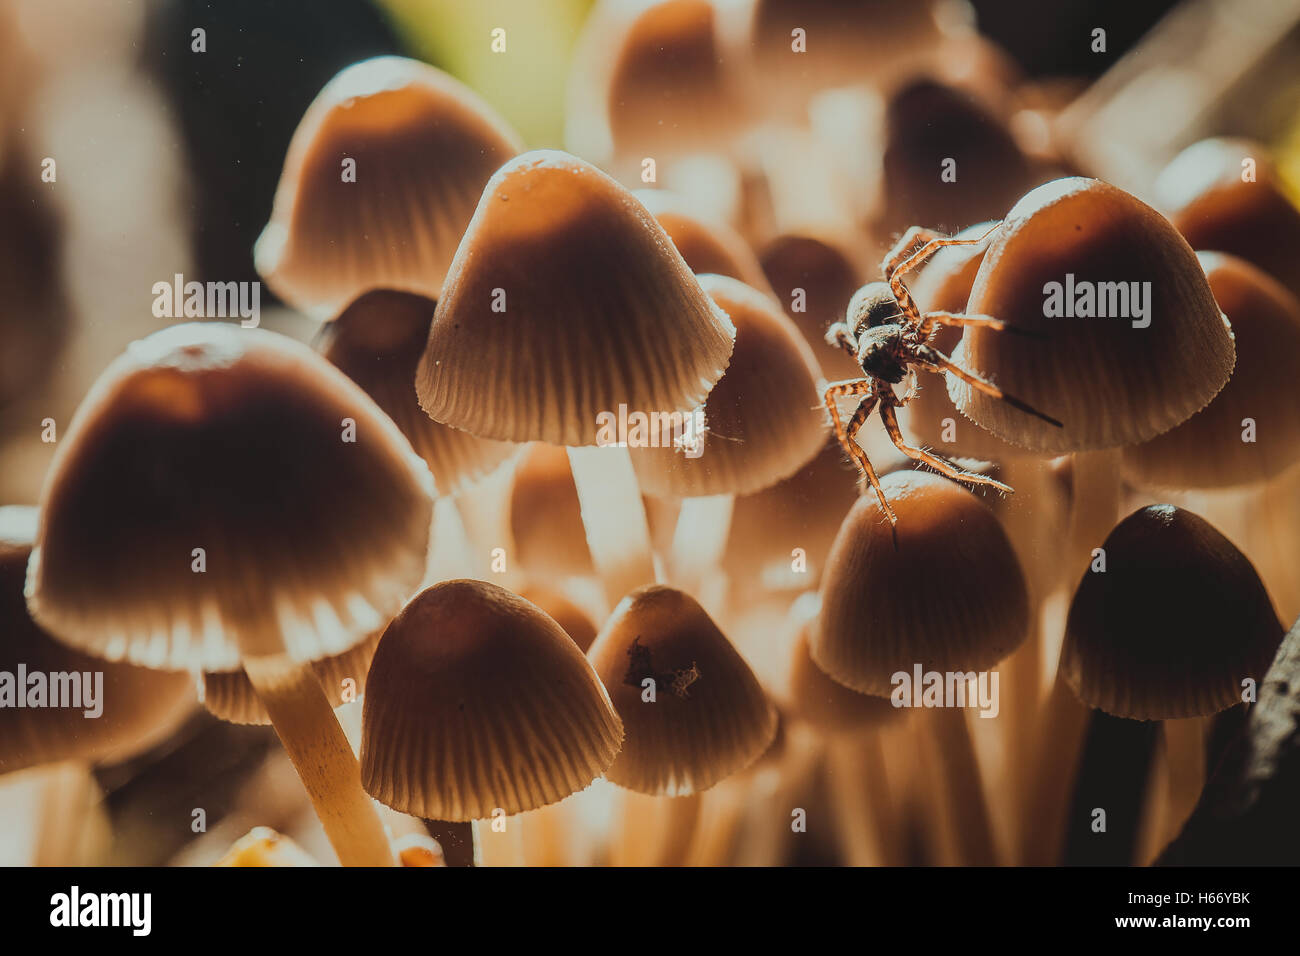 many little mushrooms on a tree stump close-up. Stock Photo